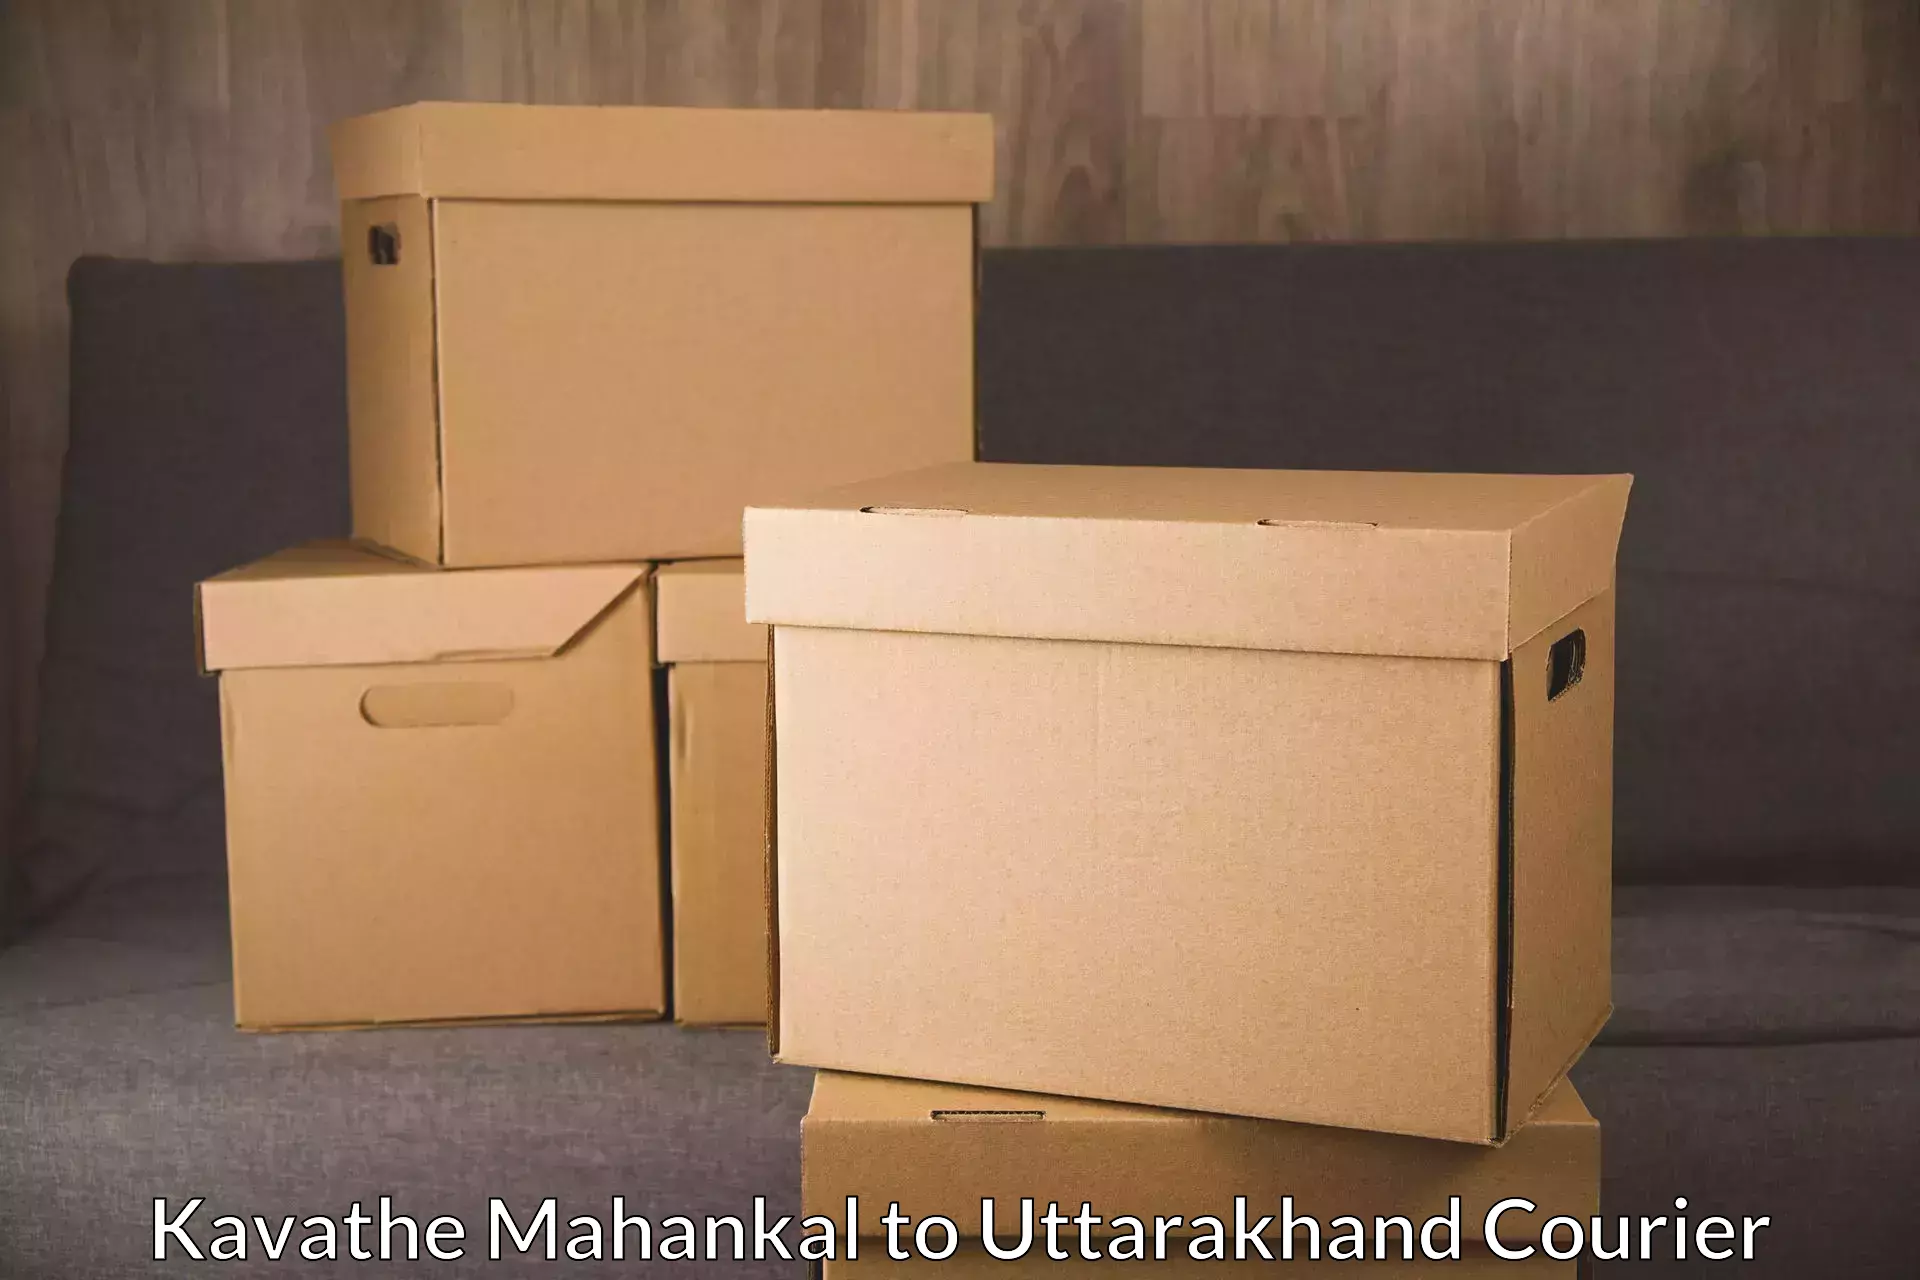 Courier service comparison Kavathe Mahankal to Rishikesh